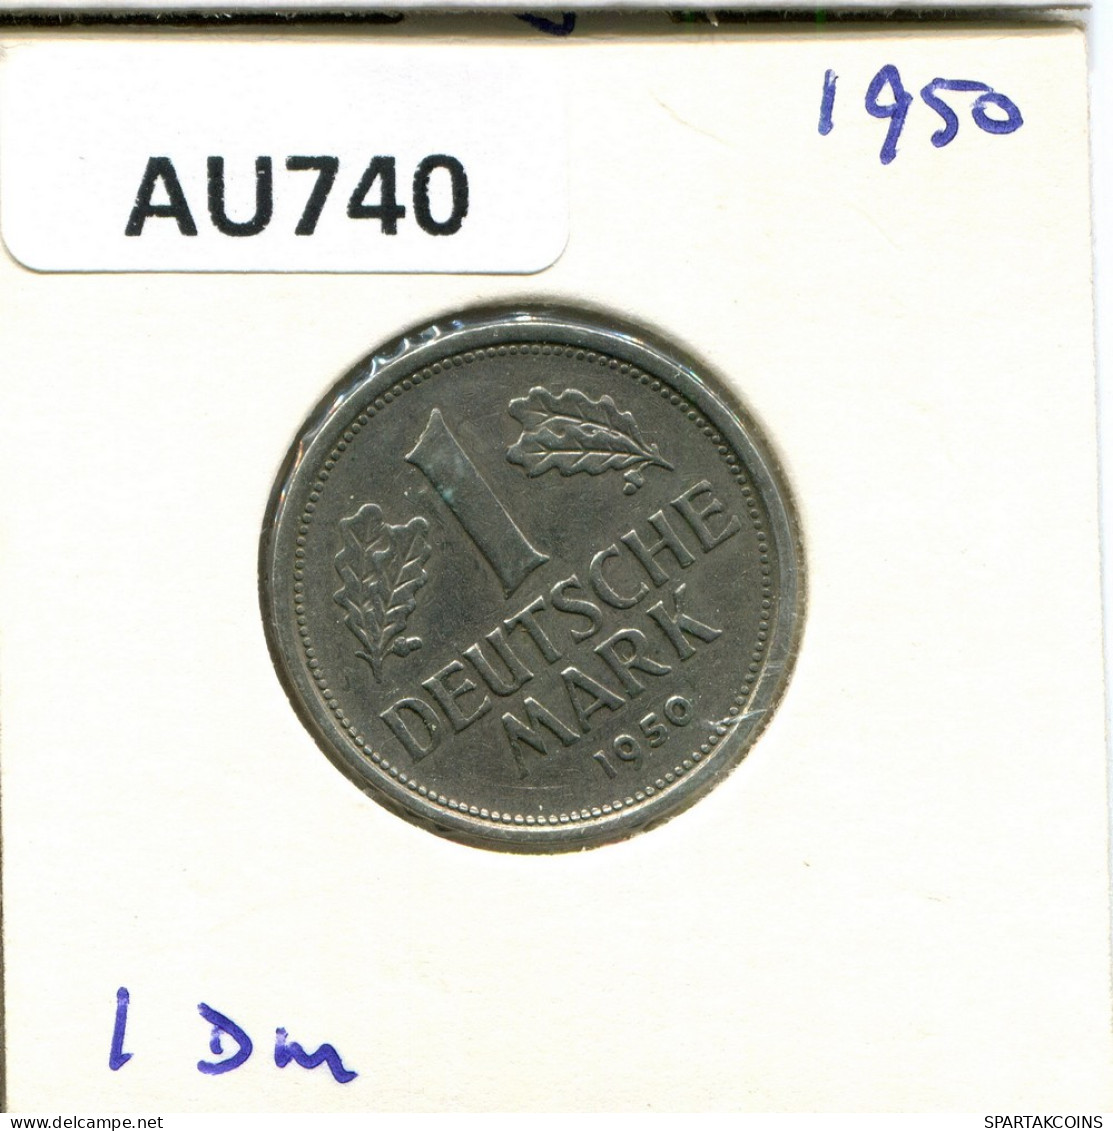 1 DM 1950 J WEST & UNIFIED GERMANY Coin #AU740.U - 1 Marco